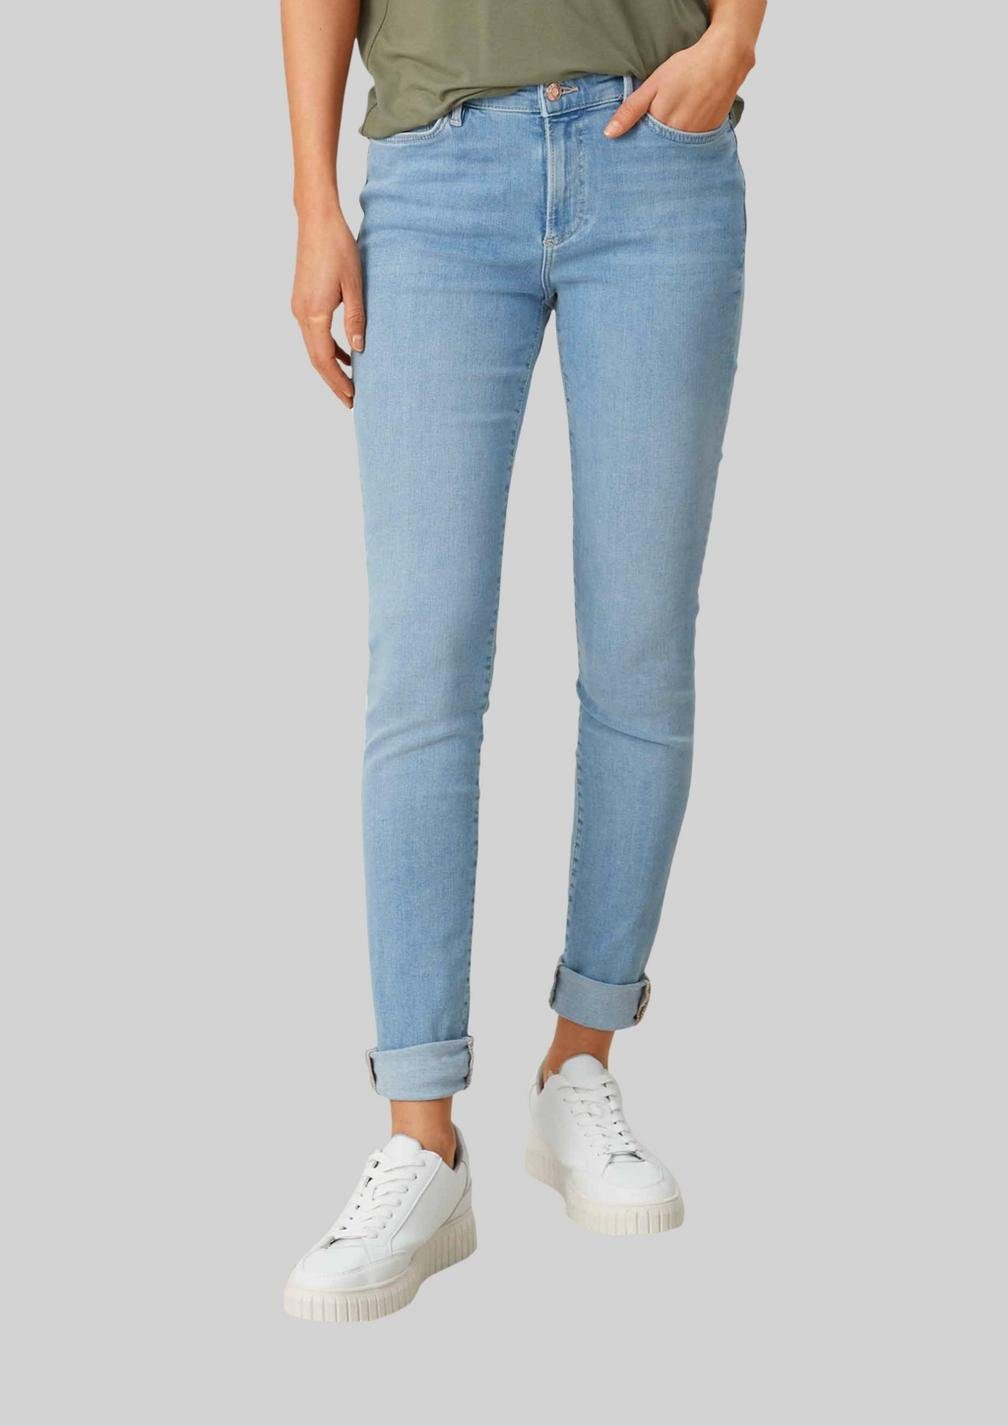 IZABELL rise, Skinny-Leg-Form Skinny 53Z4 Mid Skinny-fit-Jeans blue s.Oliver Fit, light